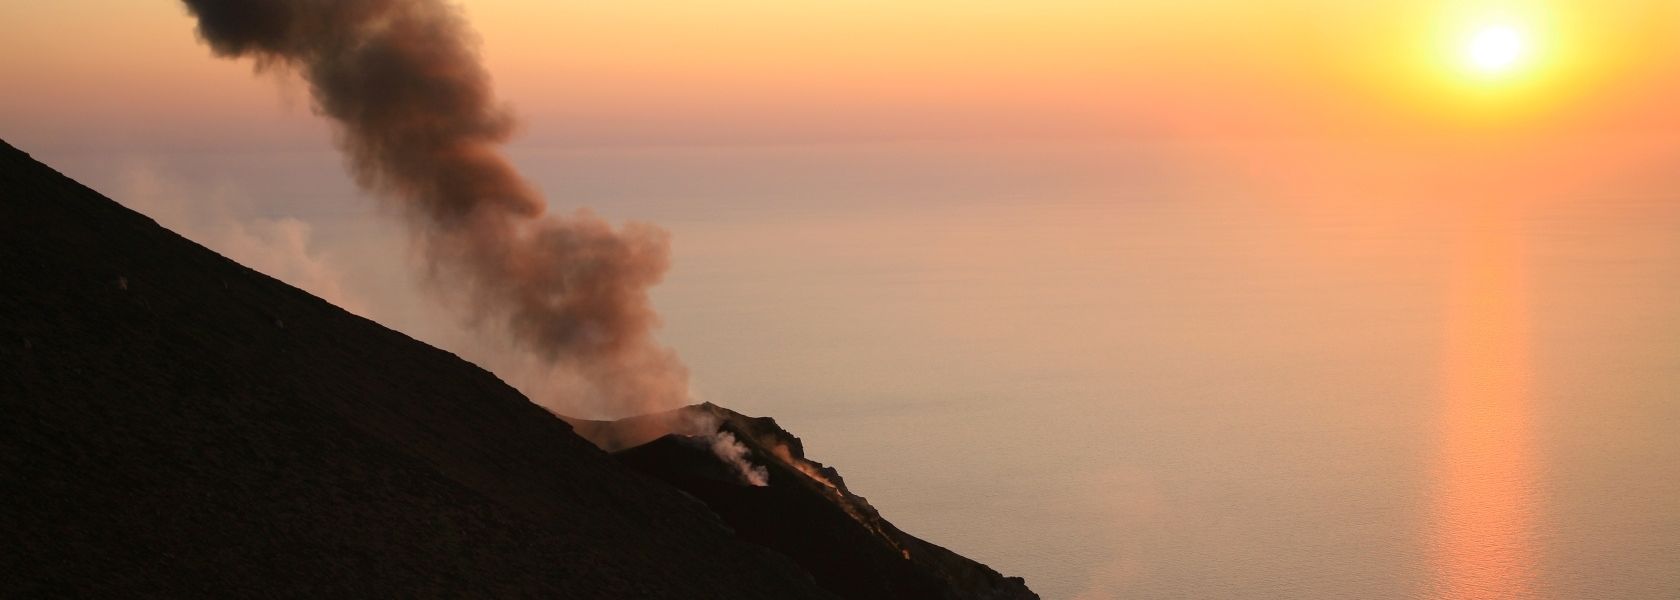 The active volcano Stromboli